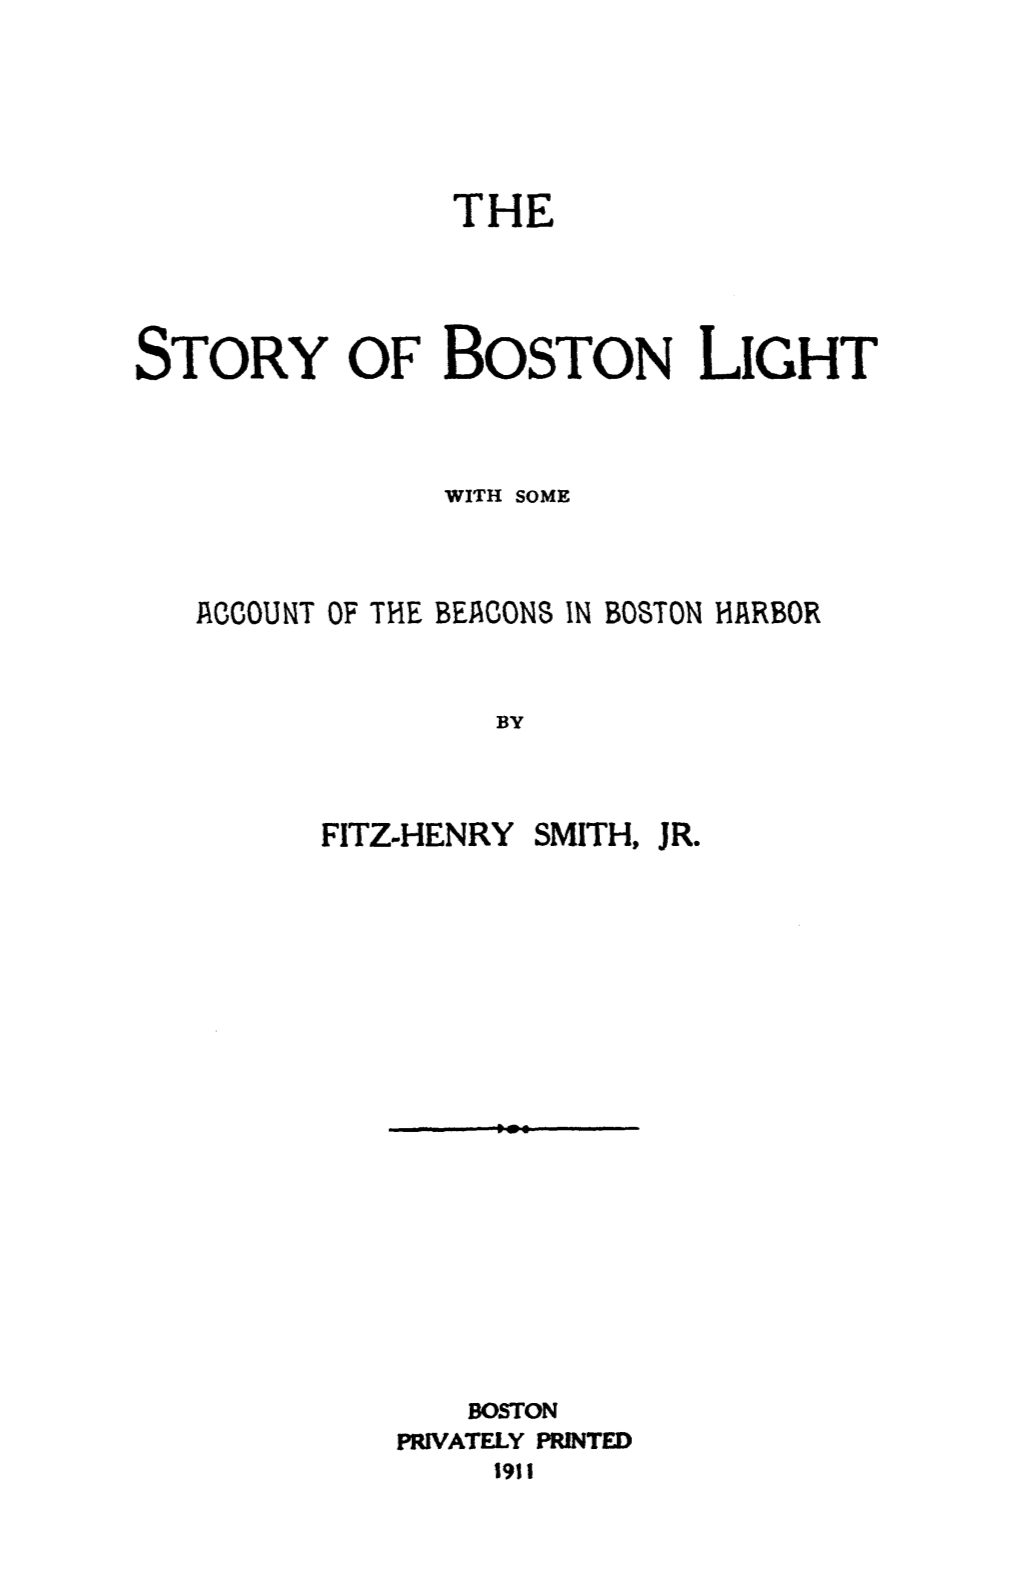 Story of Boston Light